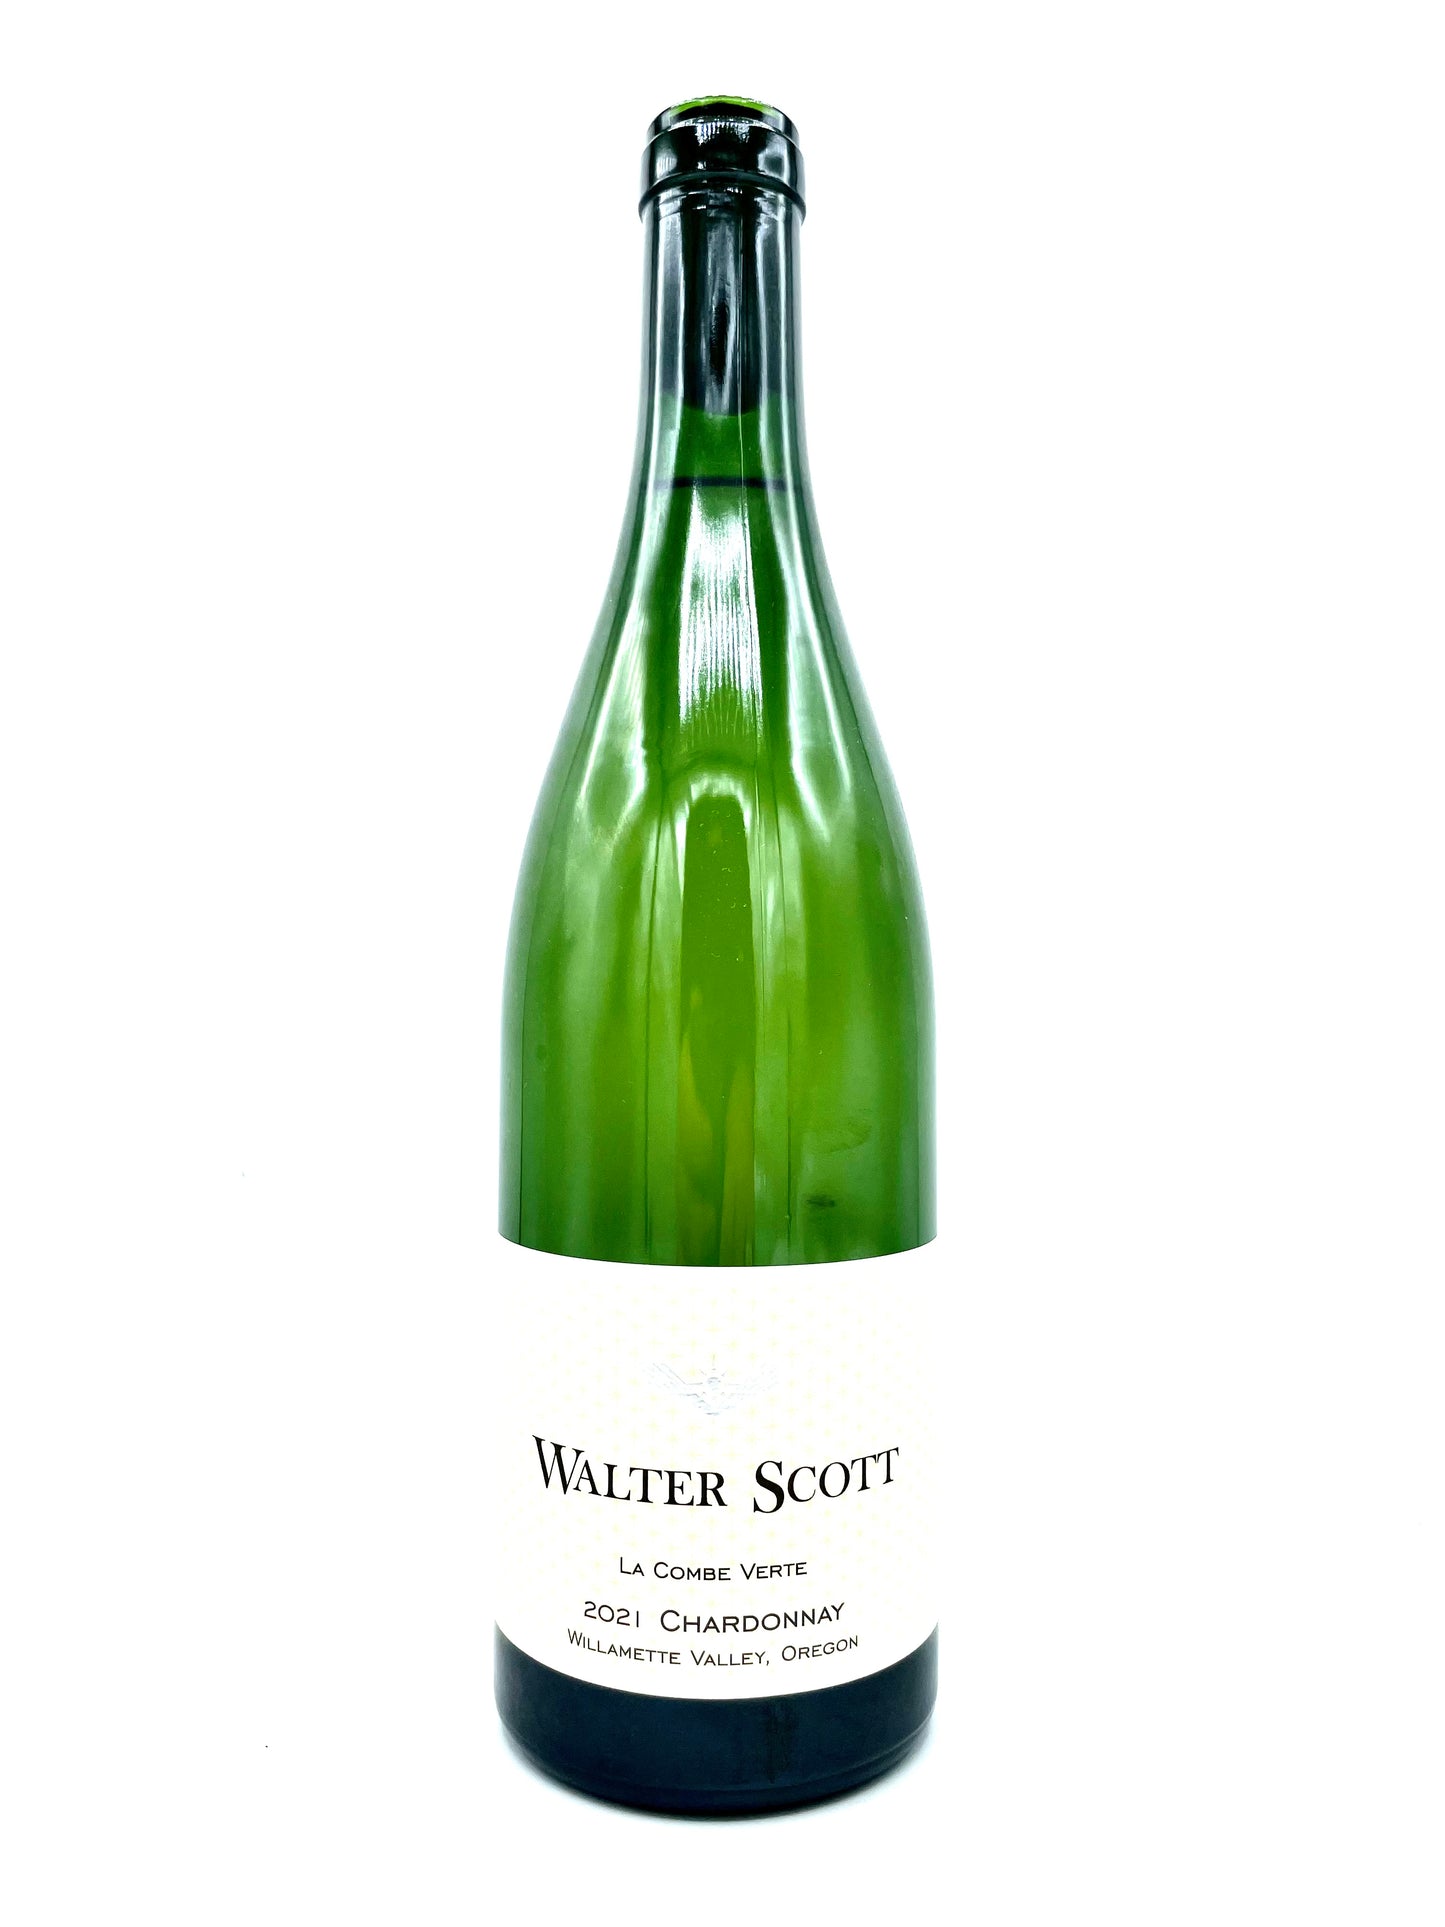 Walter Scott 'La Combe Verte' Chardonnay 2021